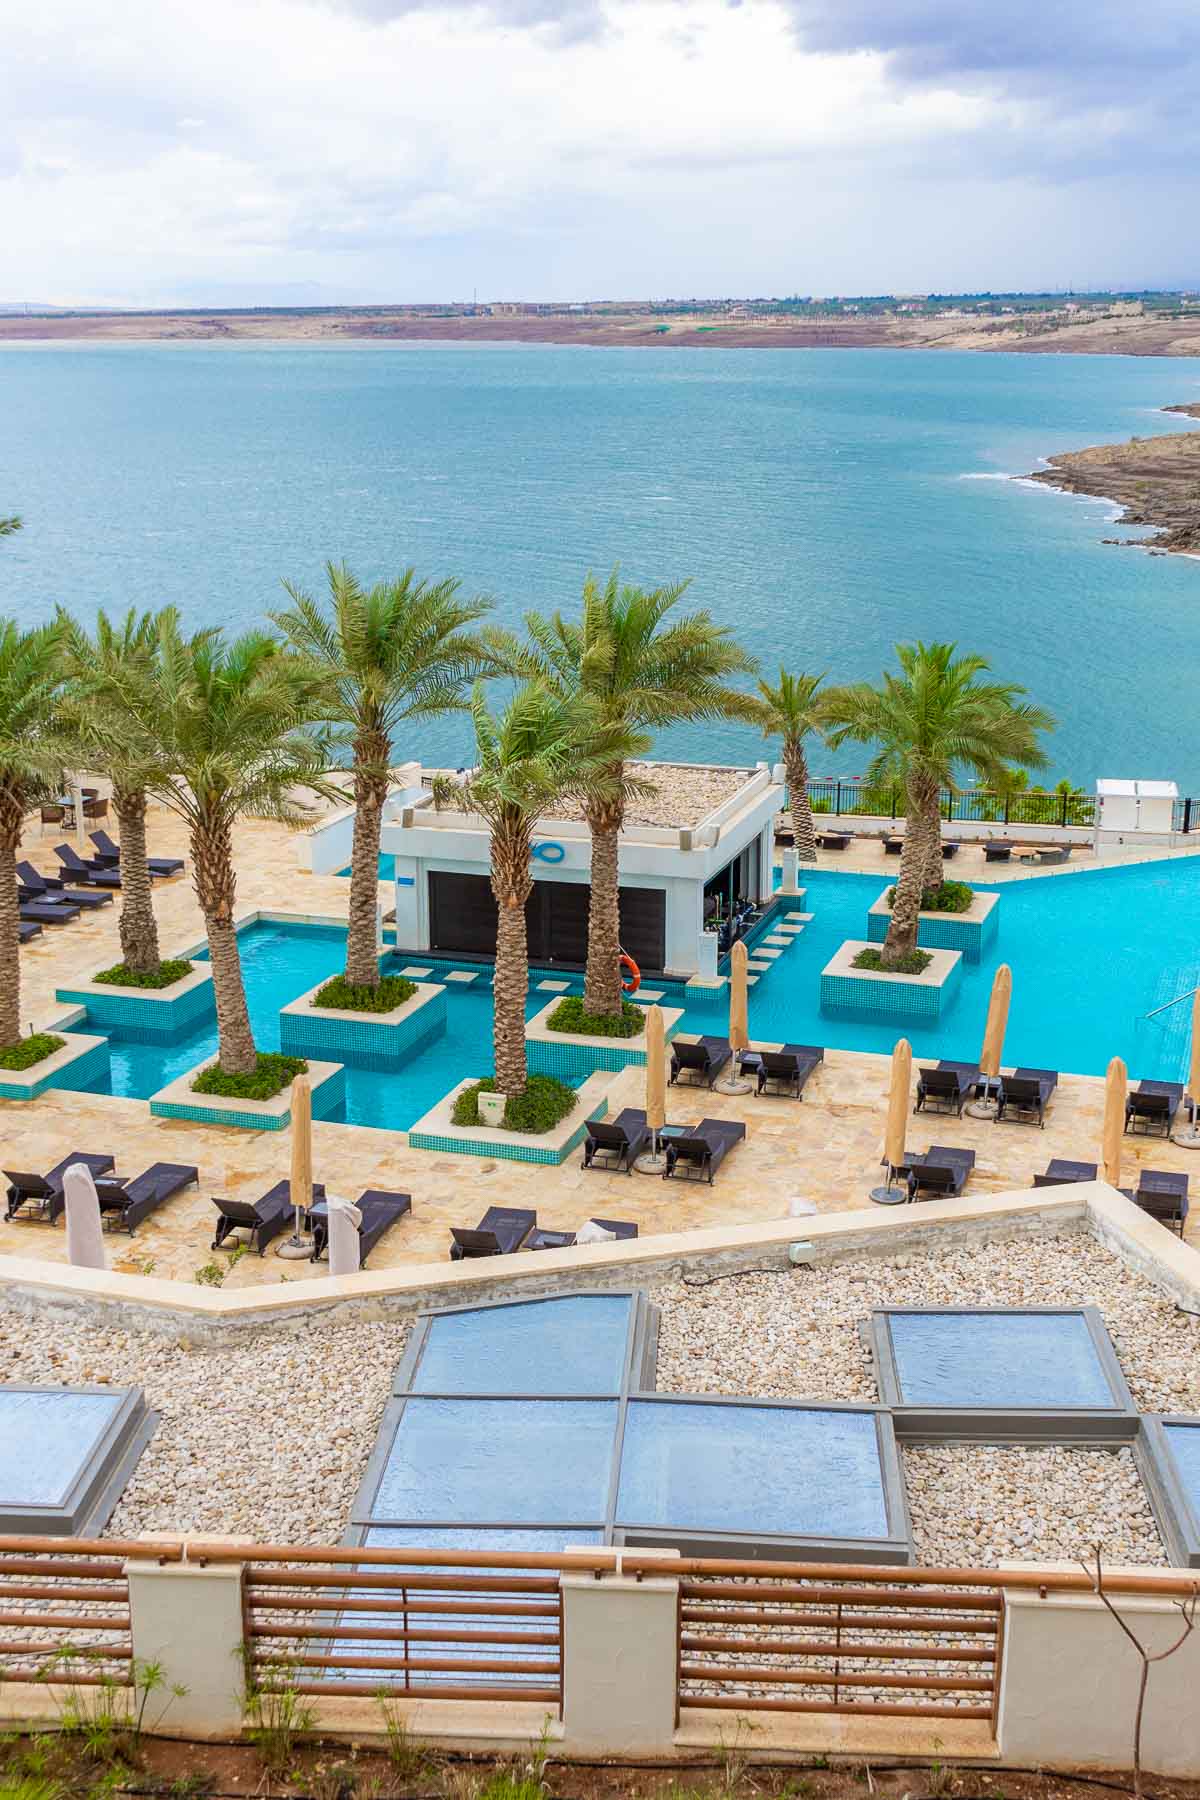 View from the Hilton Dead Sea Resort & Spa in Jordan